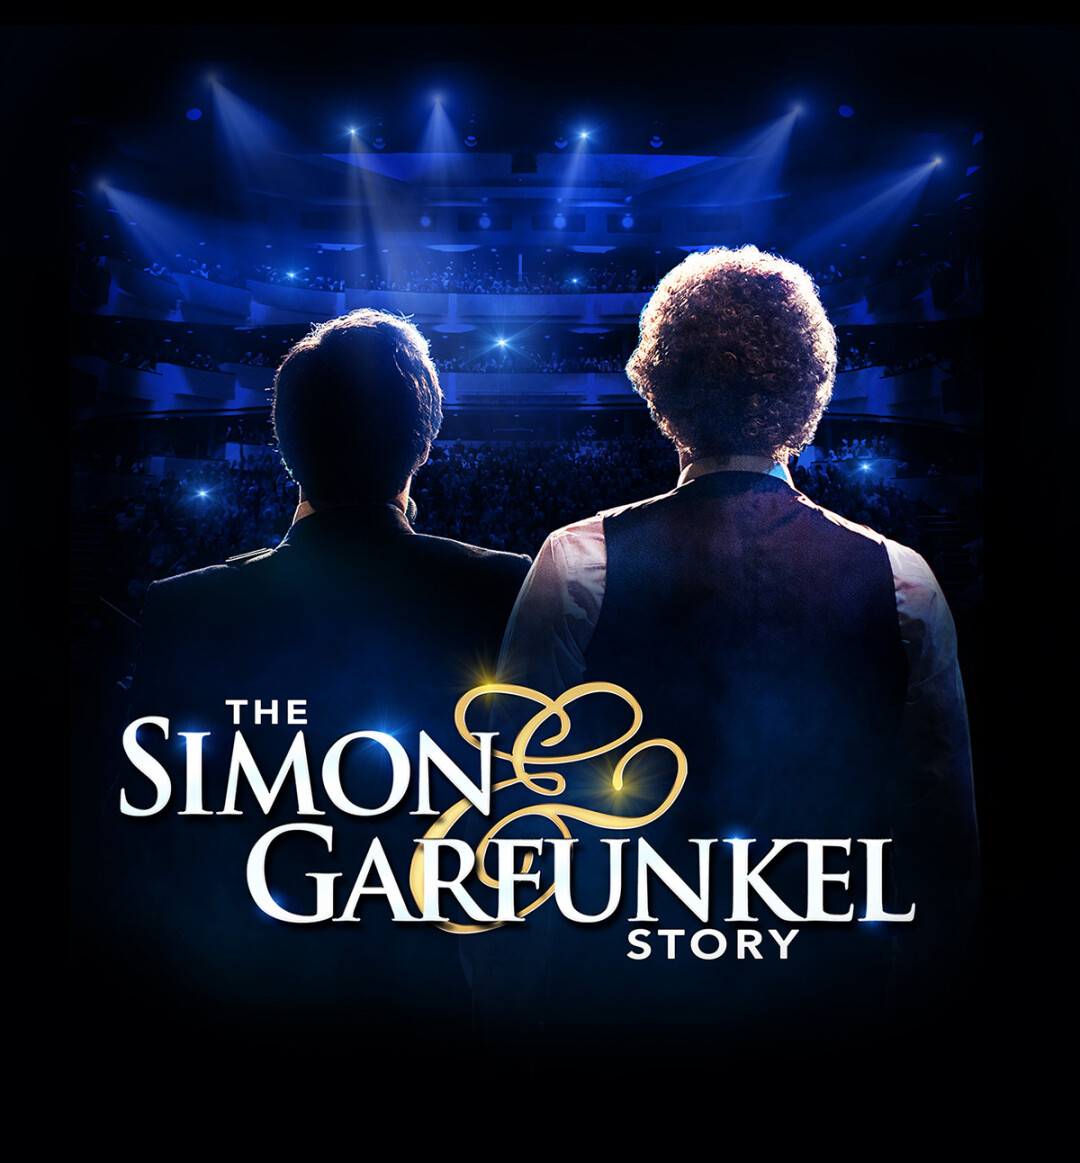 The Simon & Garfunkel Story, Jan. 30, 2021.